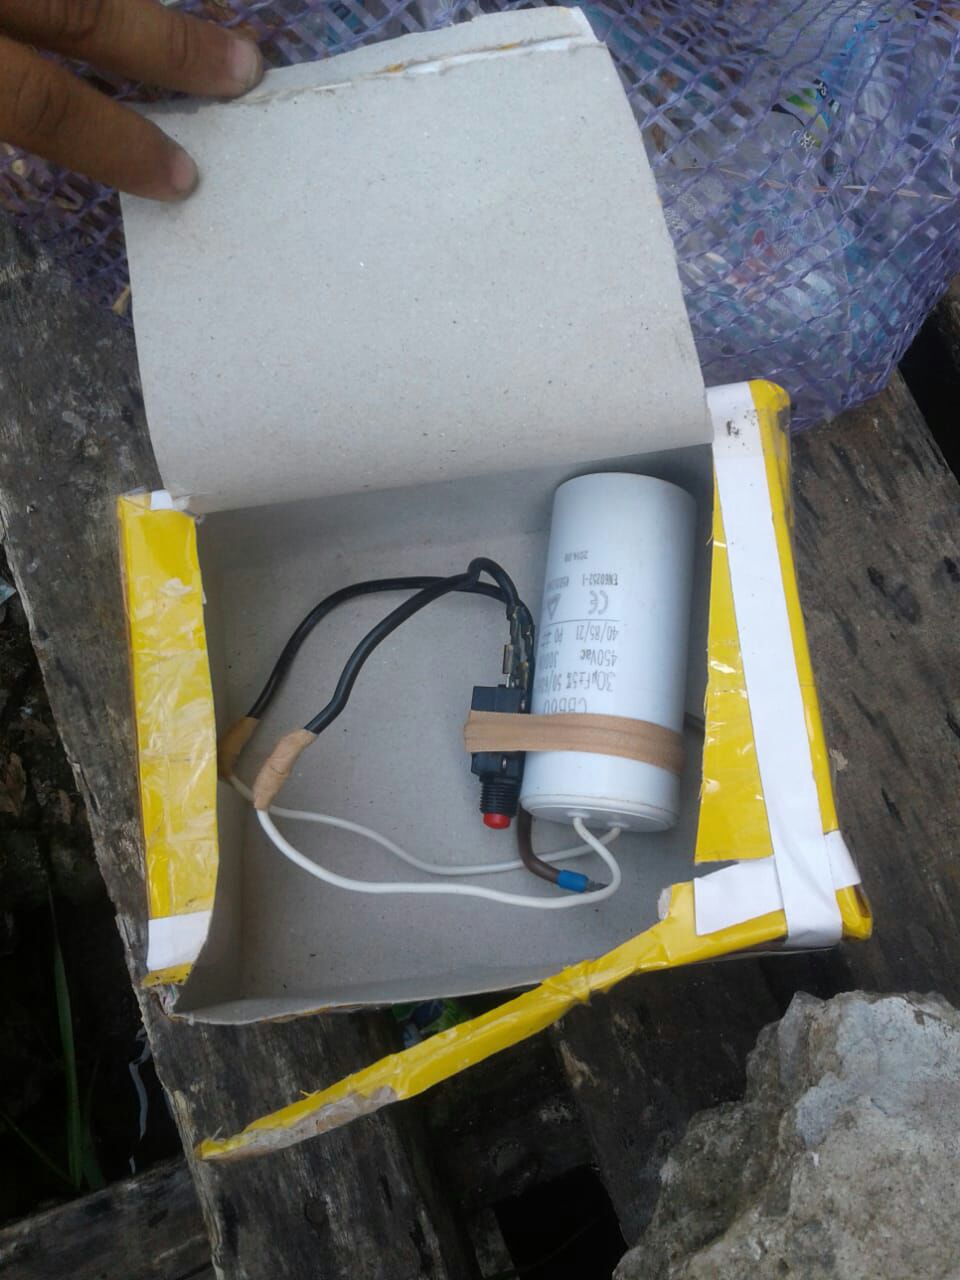 Warga digegerkan dengan penemuan kardus di duga bom di Jalan Tinumbu, Makassar, Jumat (27/4).(ist)